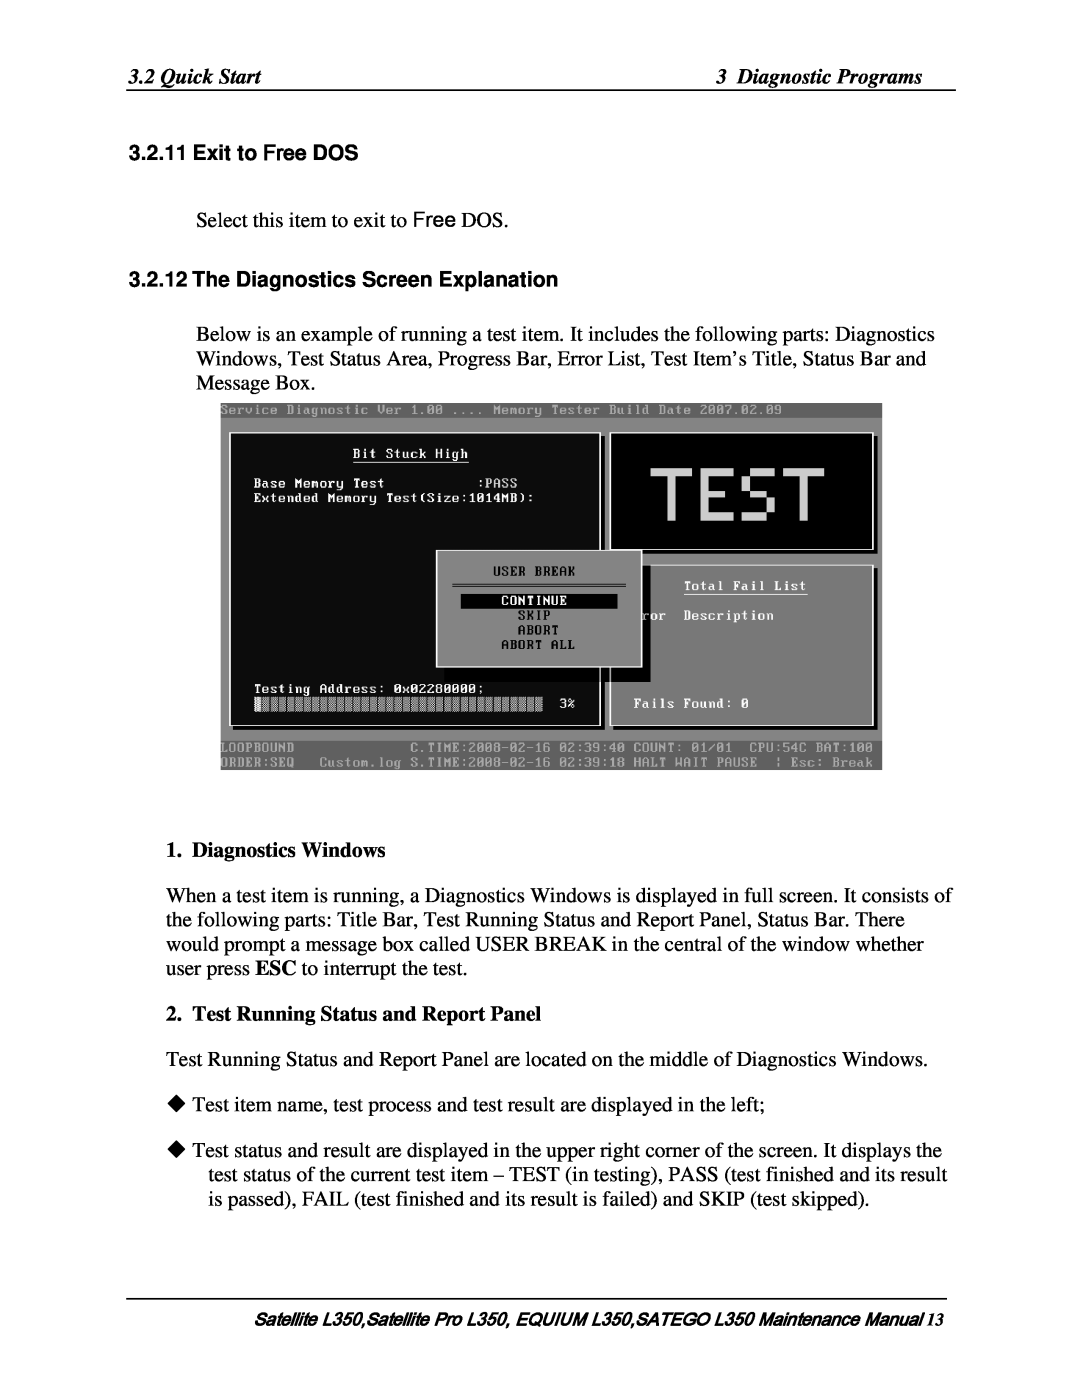 Toshiba PSLD1X, PSLD2X, PSLD3X manual Exit to Free DOS, The Diagnostics Screen Explanation, Diagnostics Windows 